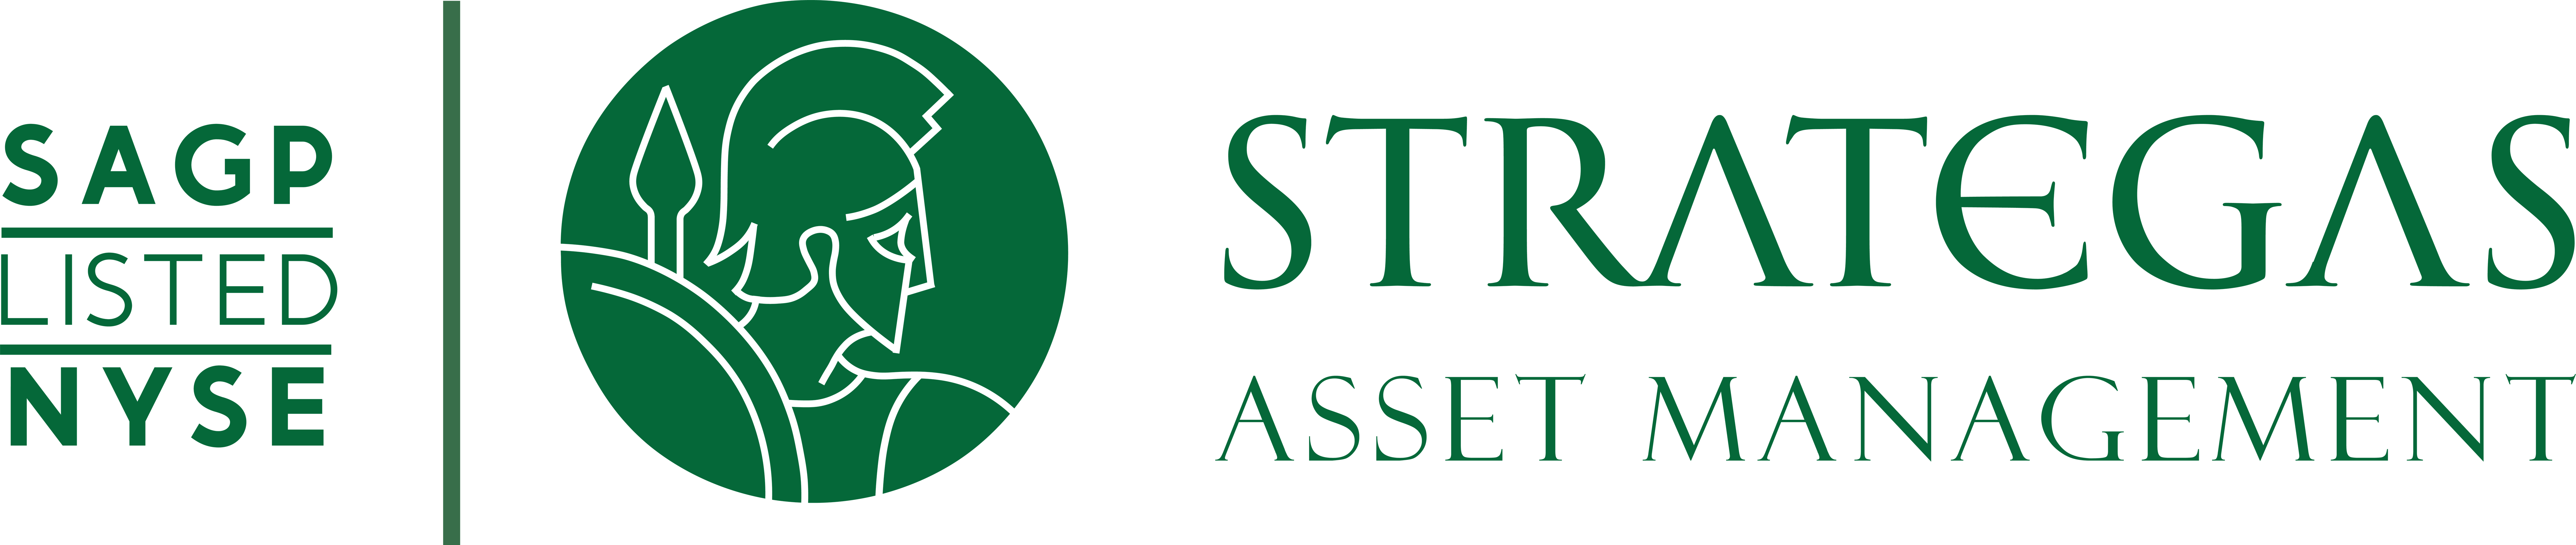 Strategas Asset Management Logo